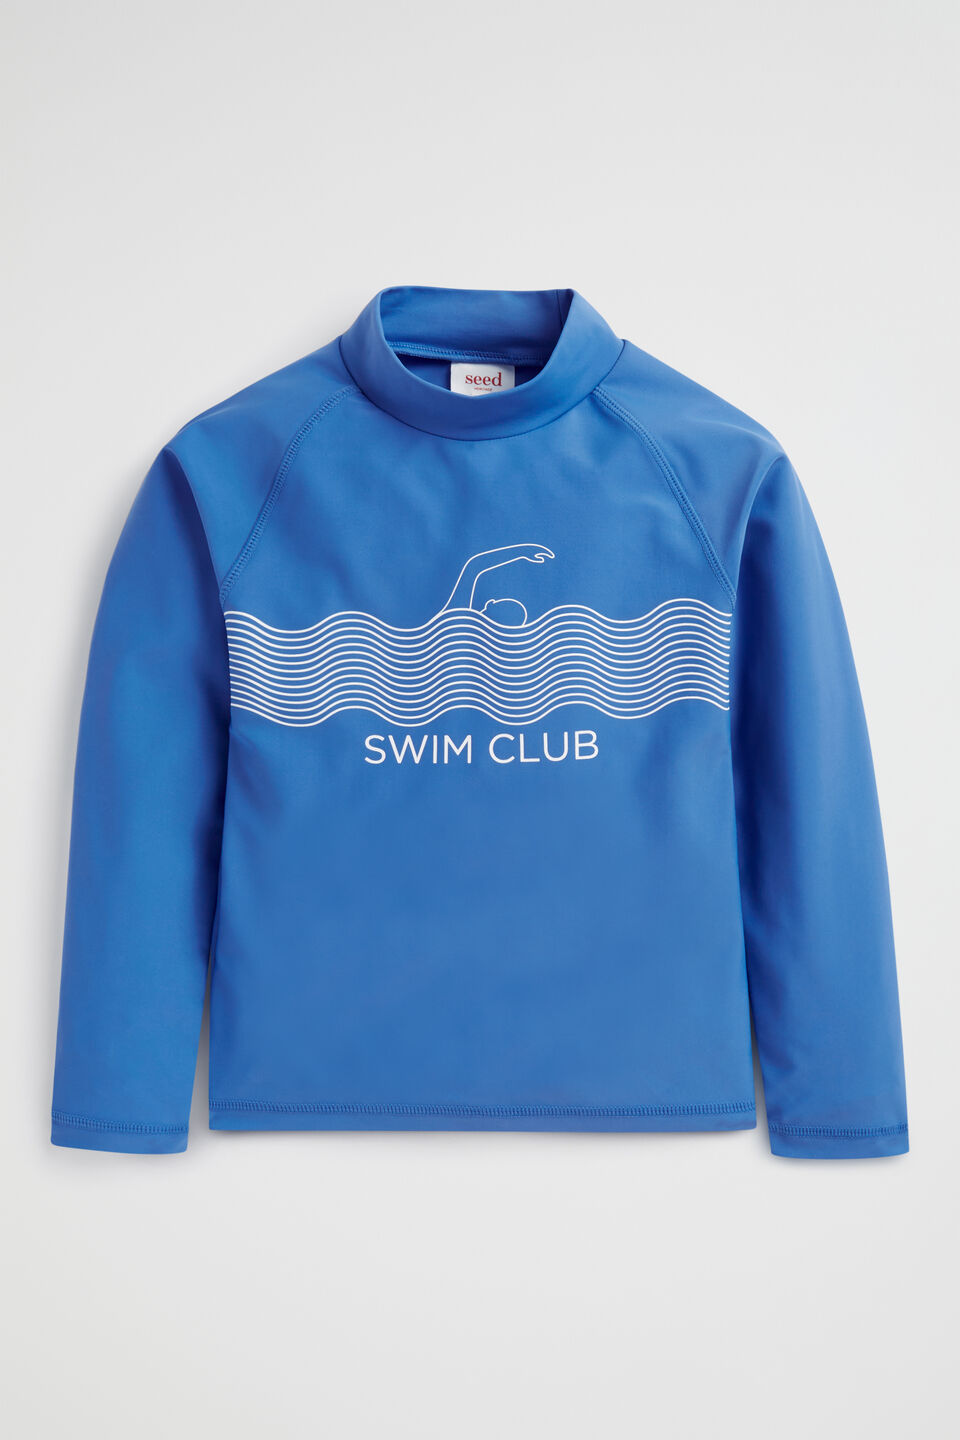 Swim Club Rashvest  Bluebell